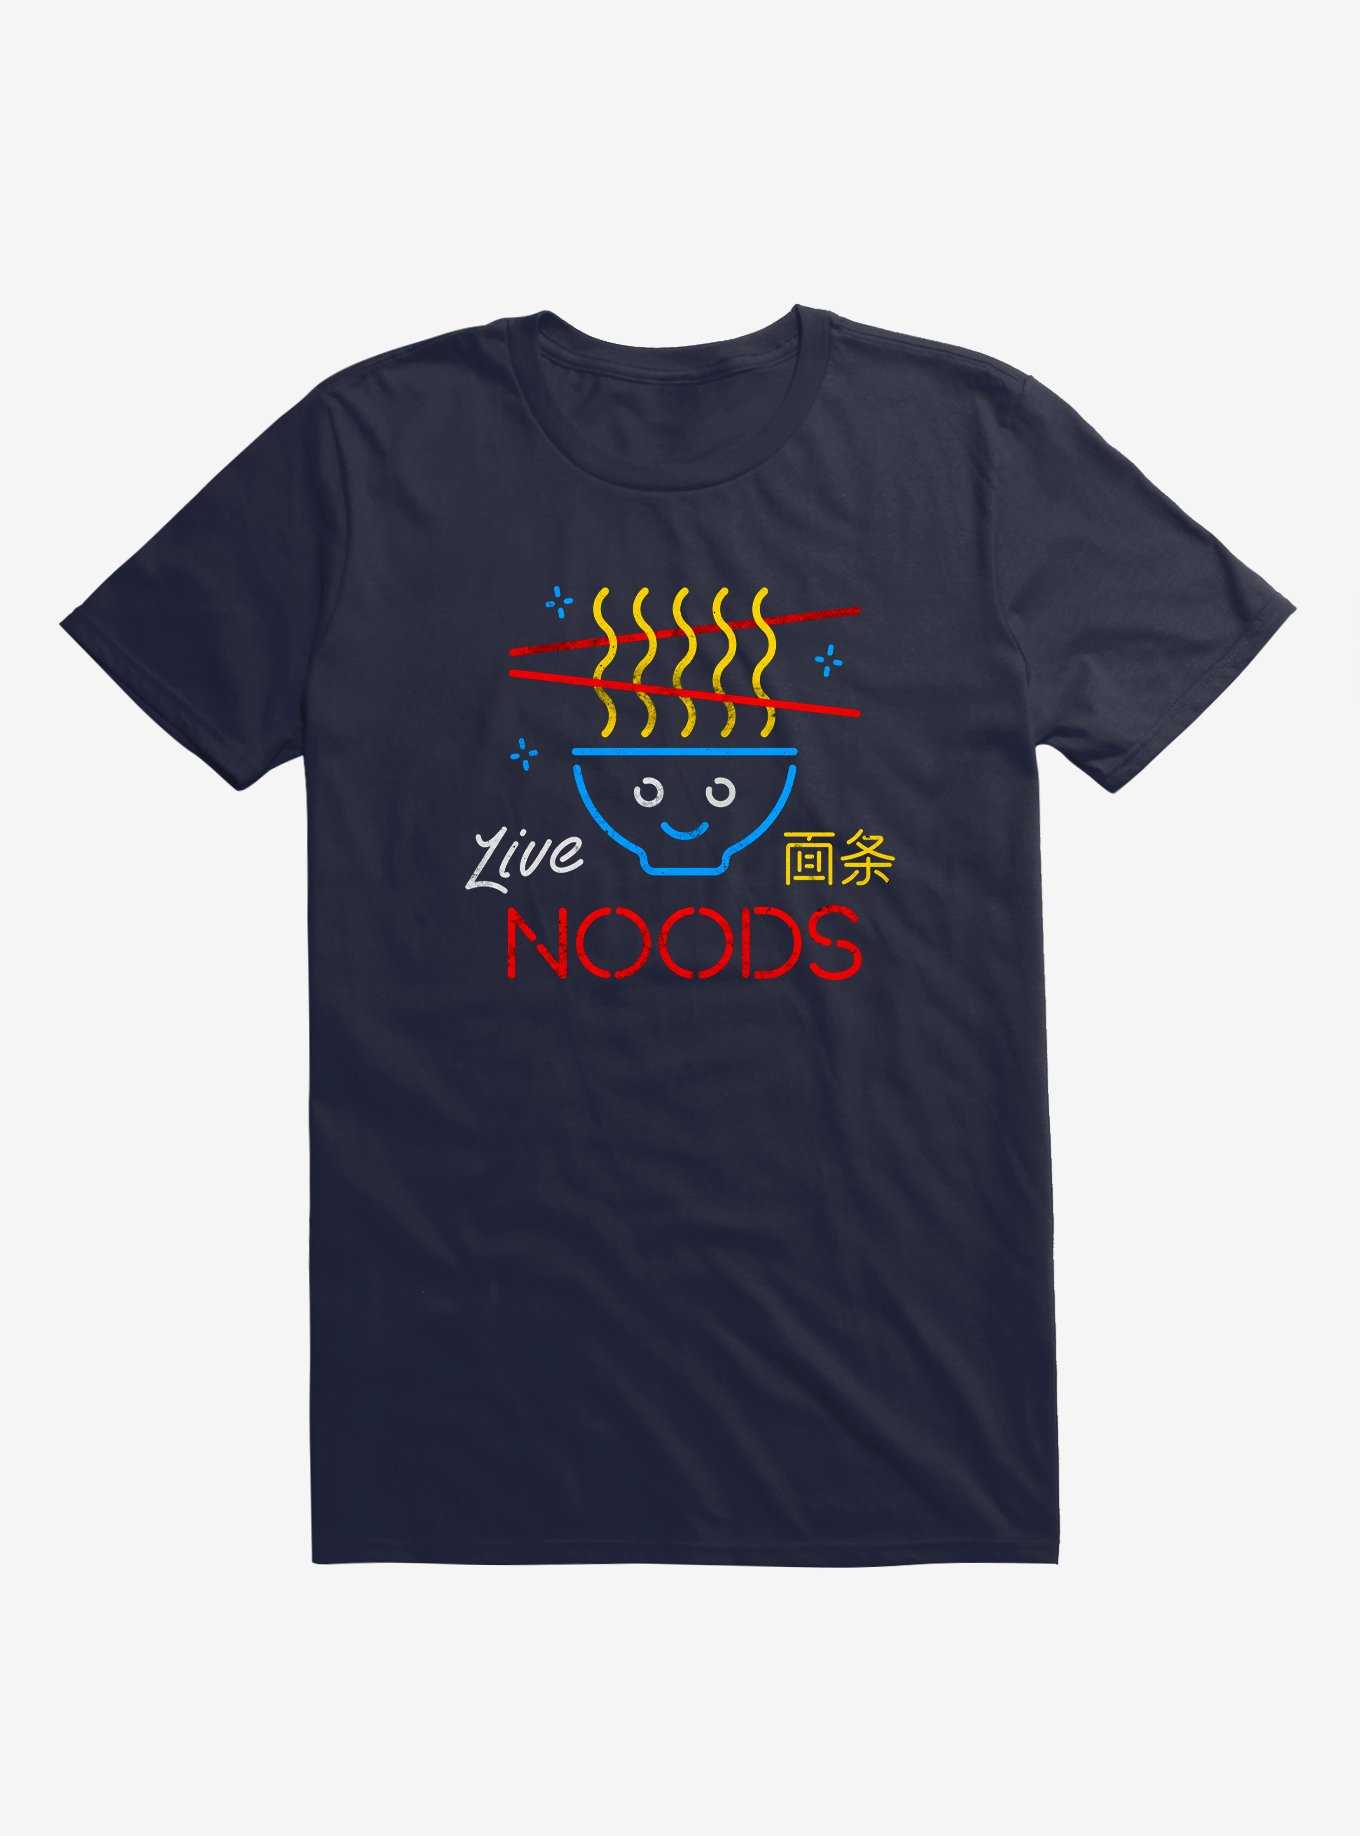 Live Noods Noodle Navy Blue T-Shirt, , hi-res